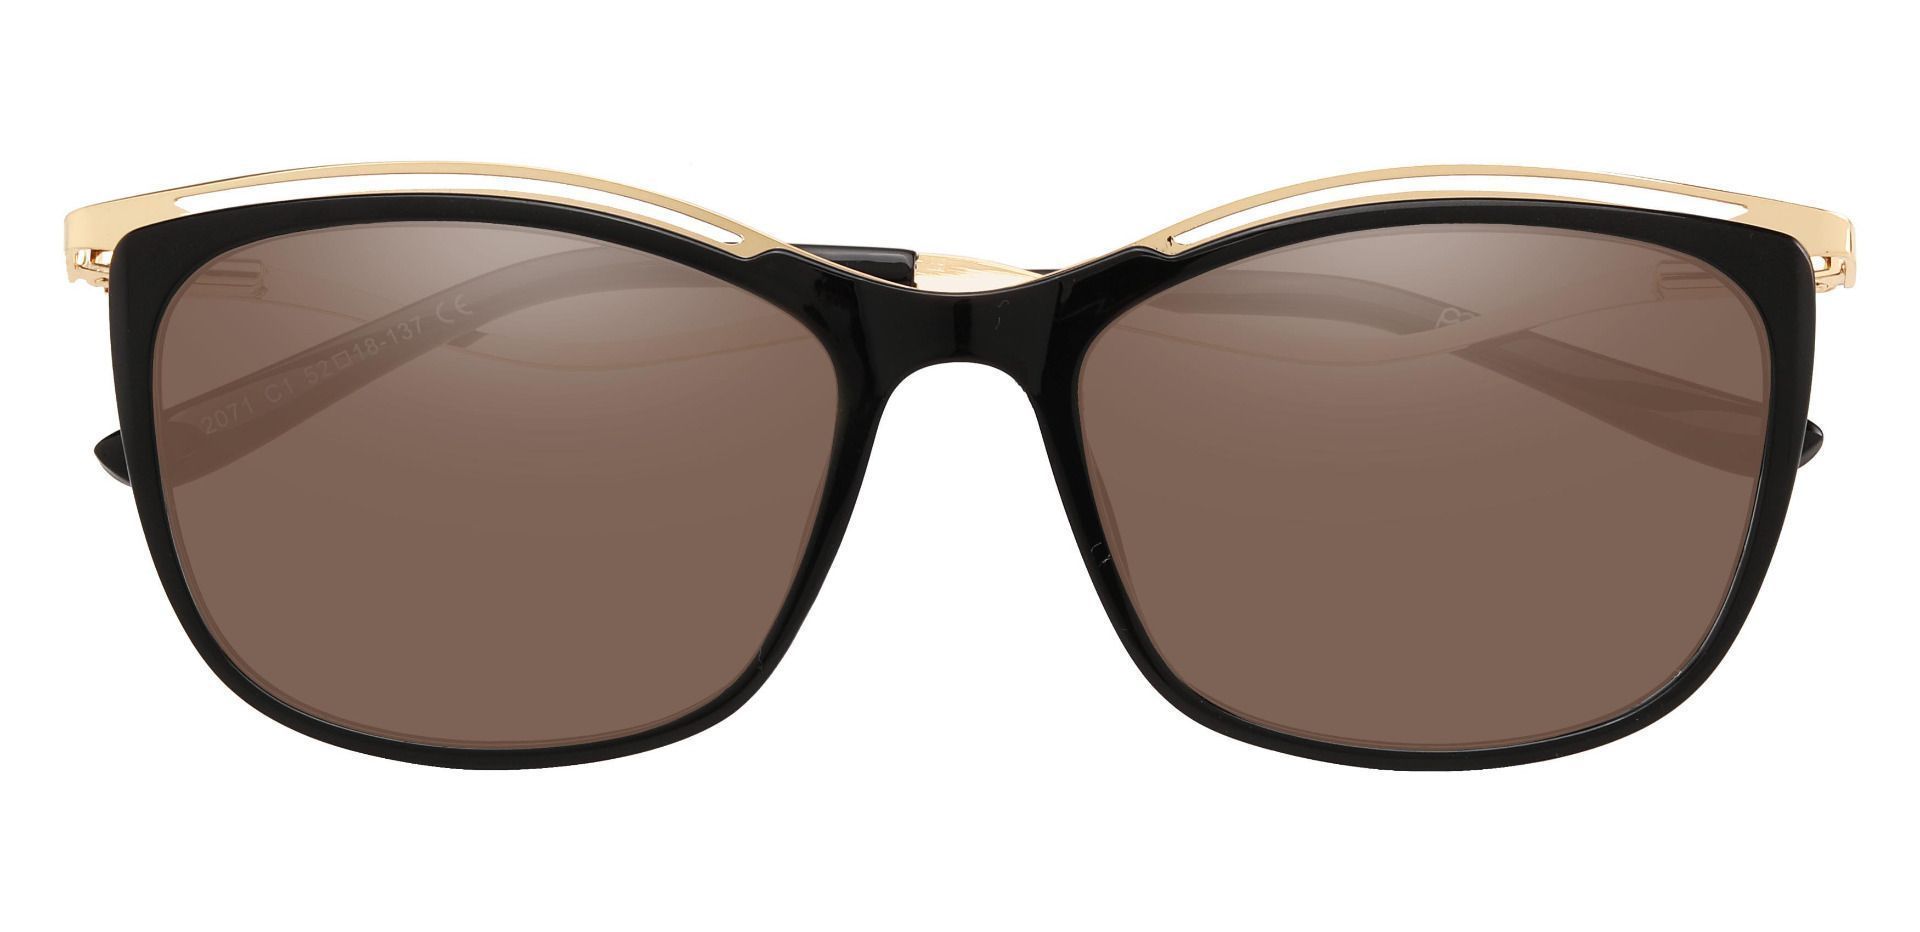 Enola Cat Eye Lined Bifocal Sunglasses - Black Frame With Brown Lenses